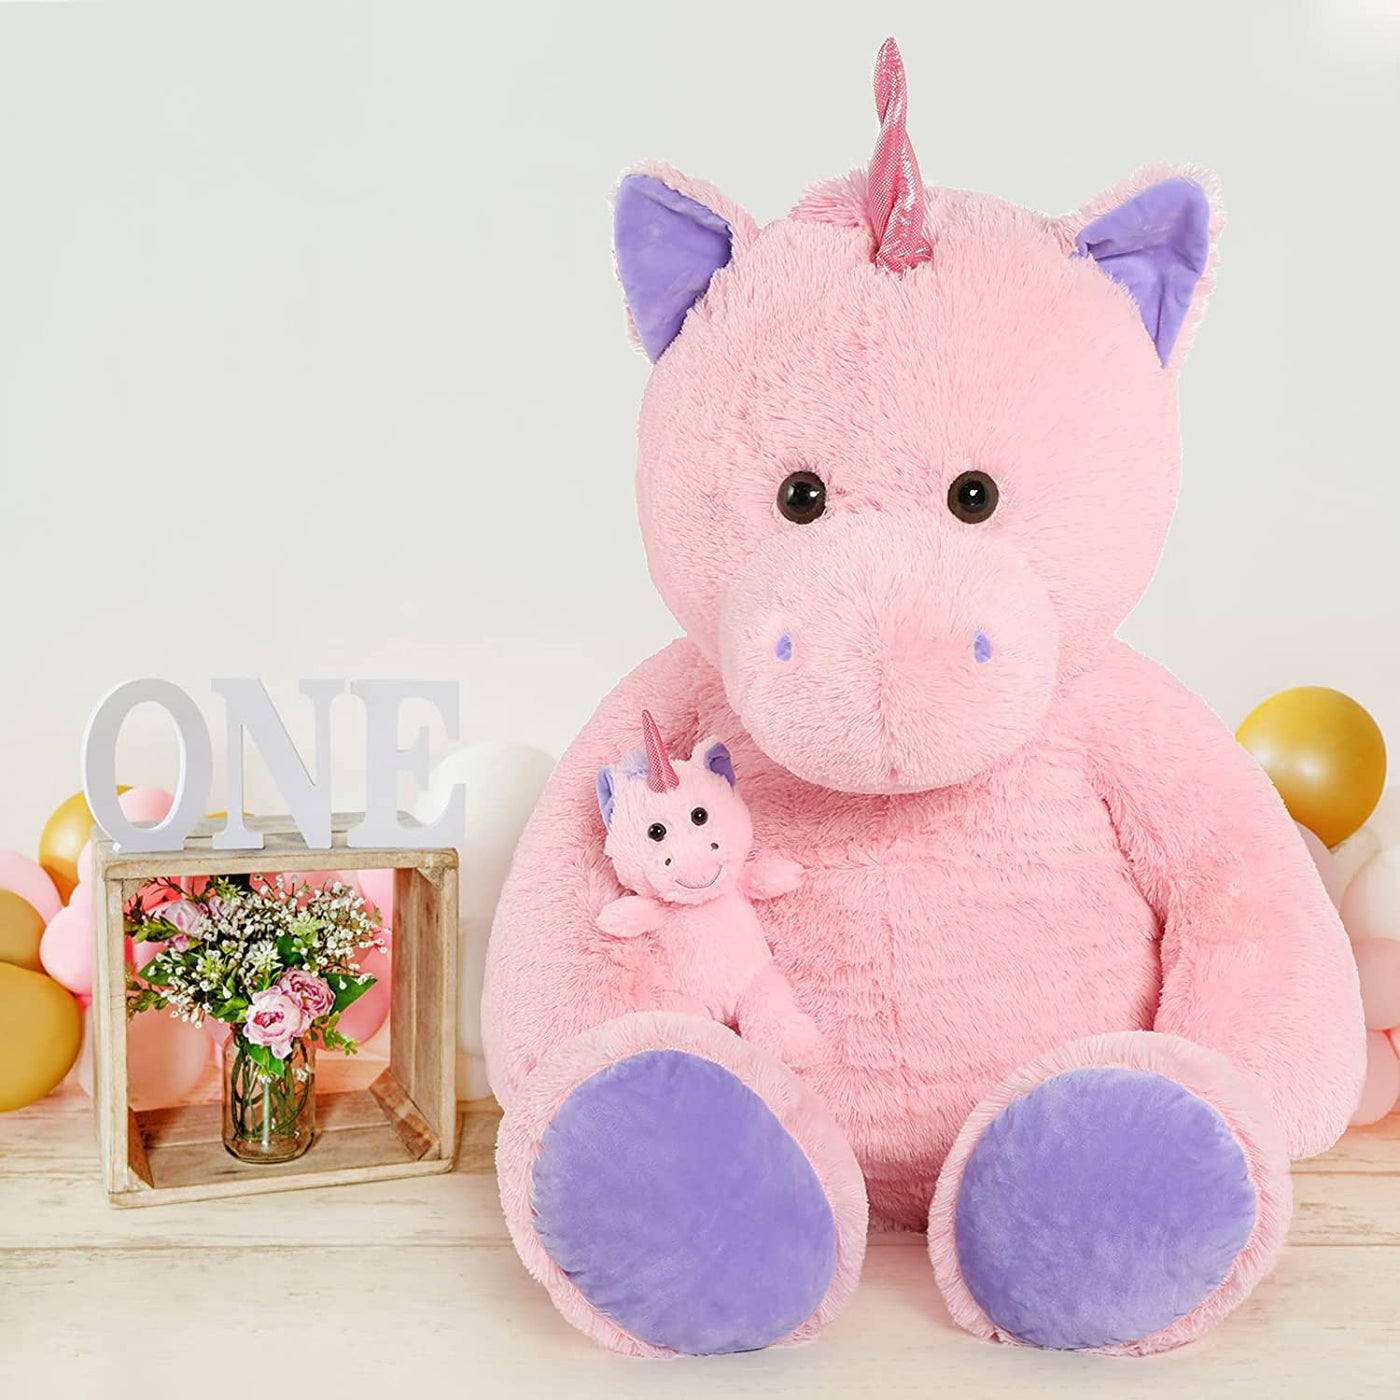 Giant Unicorn Stuffed Animal Toy, Pink, 51 Inches